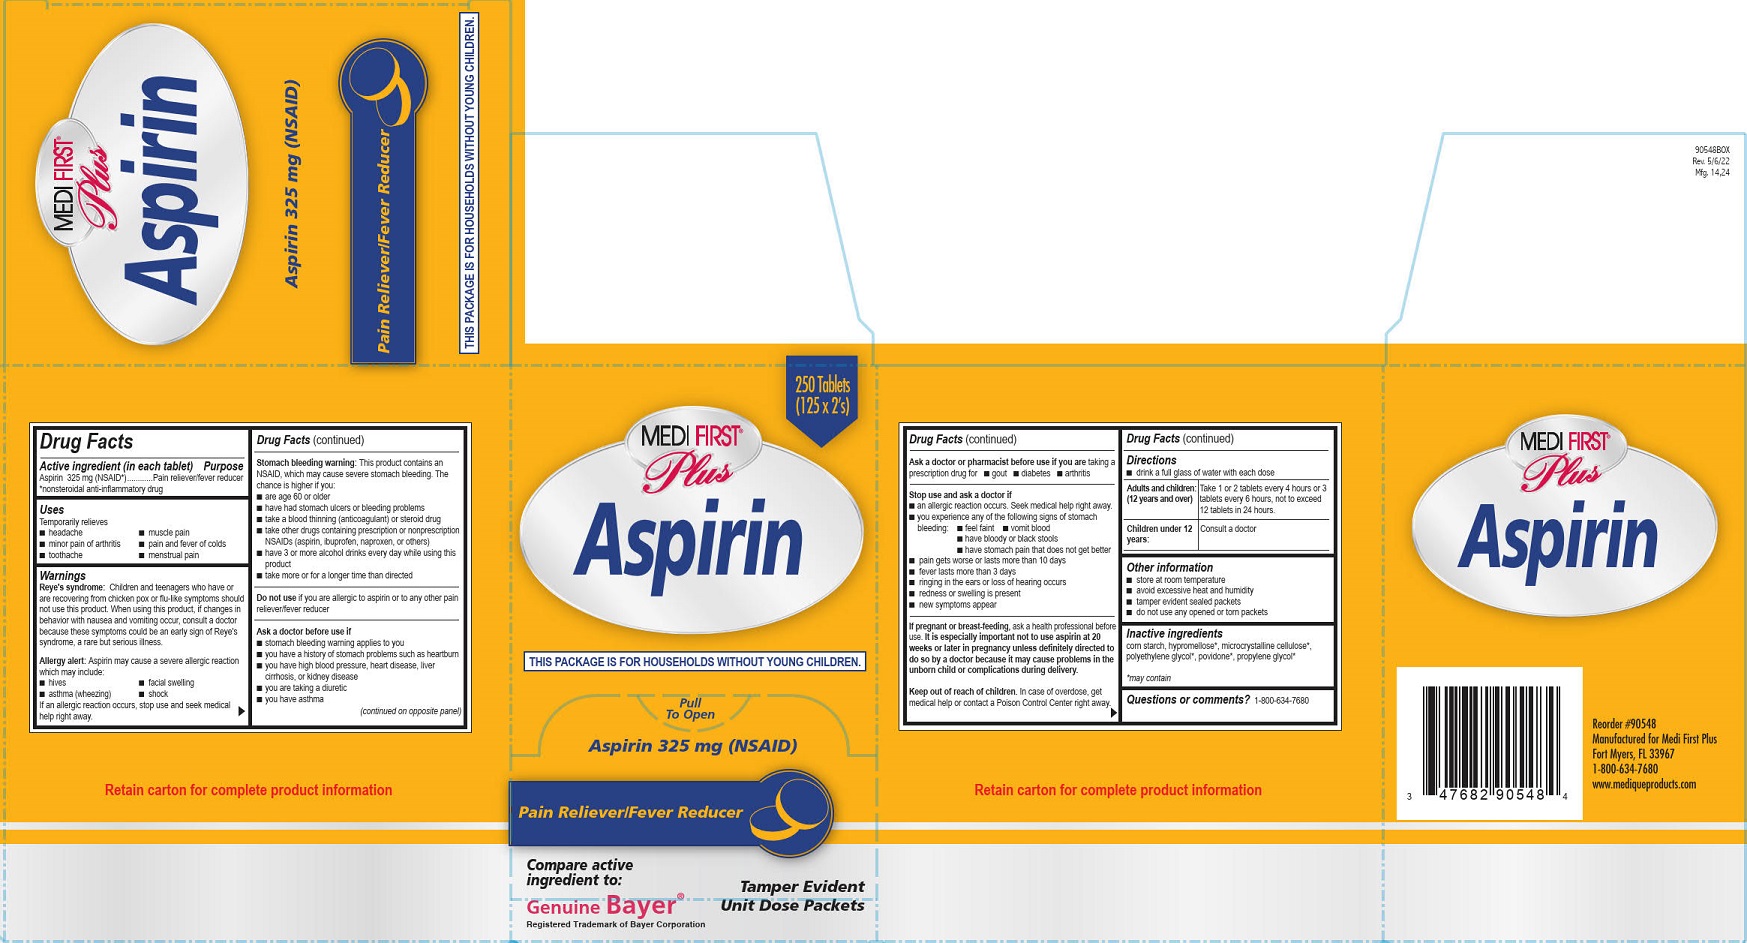 116R MFP 2 Aspirin